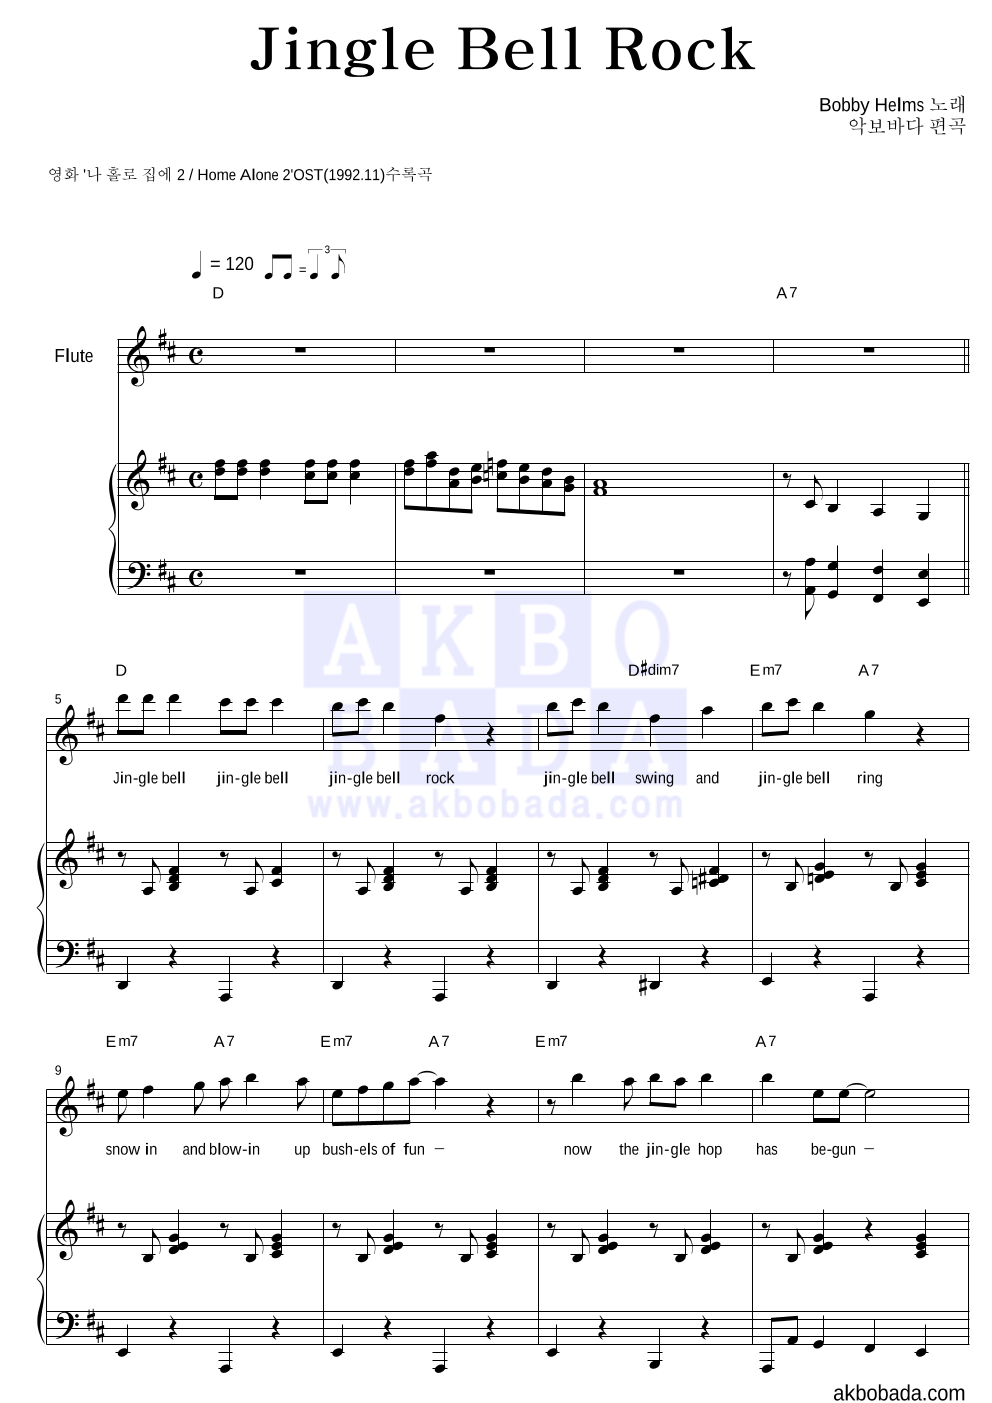 Bobby Helms - Jingle Bell Rock 플룻&피아노 악보 